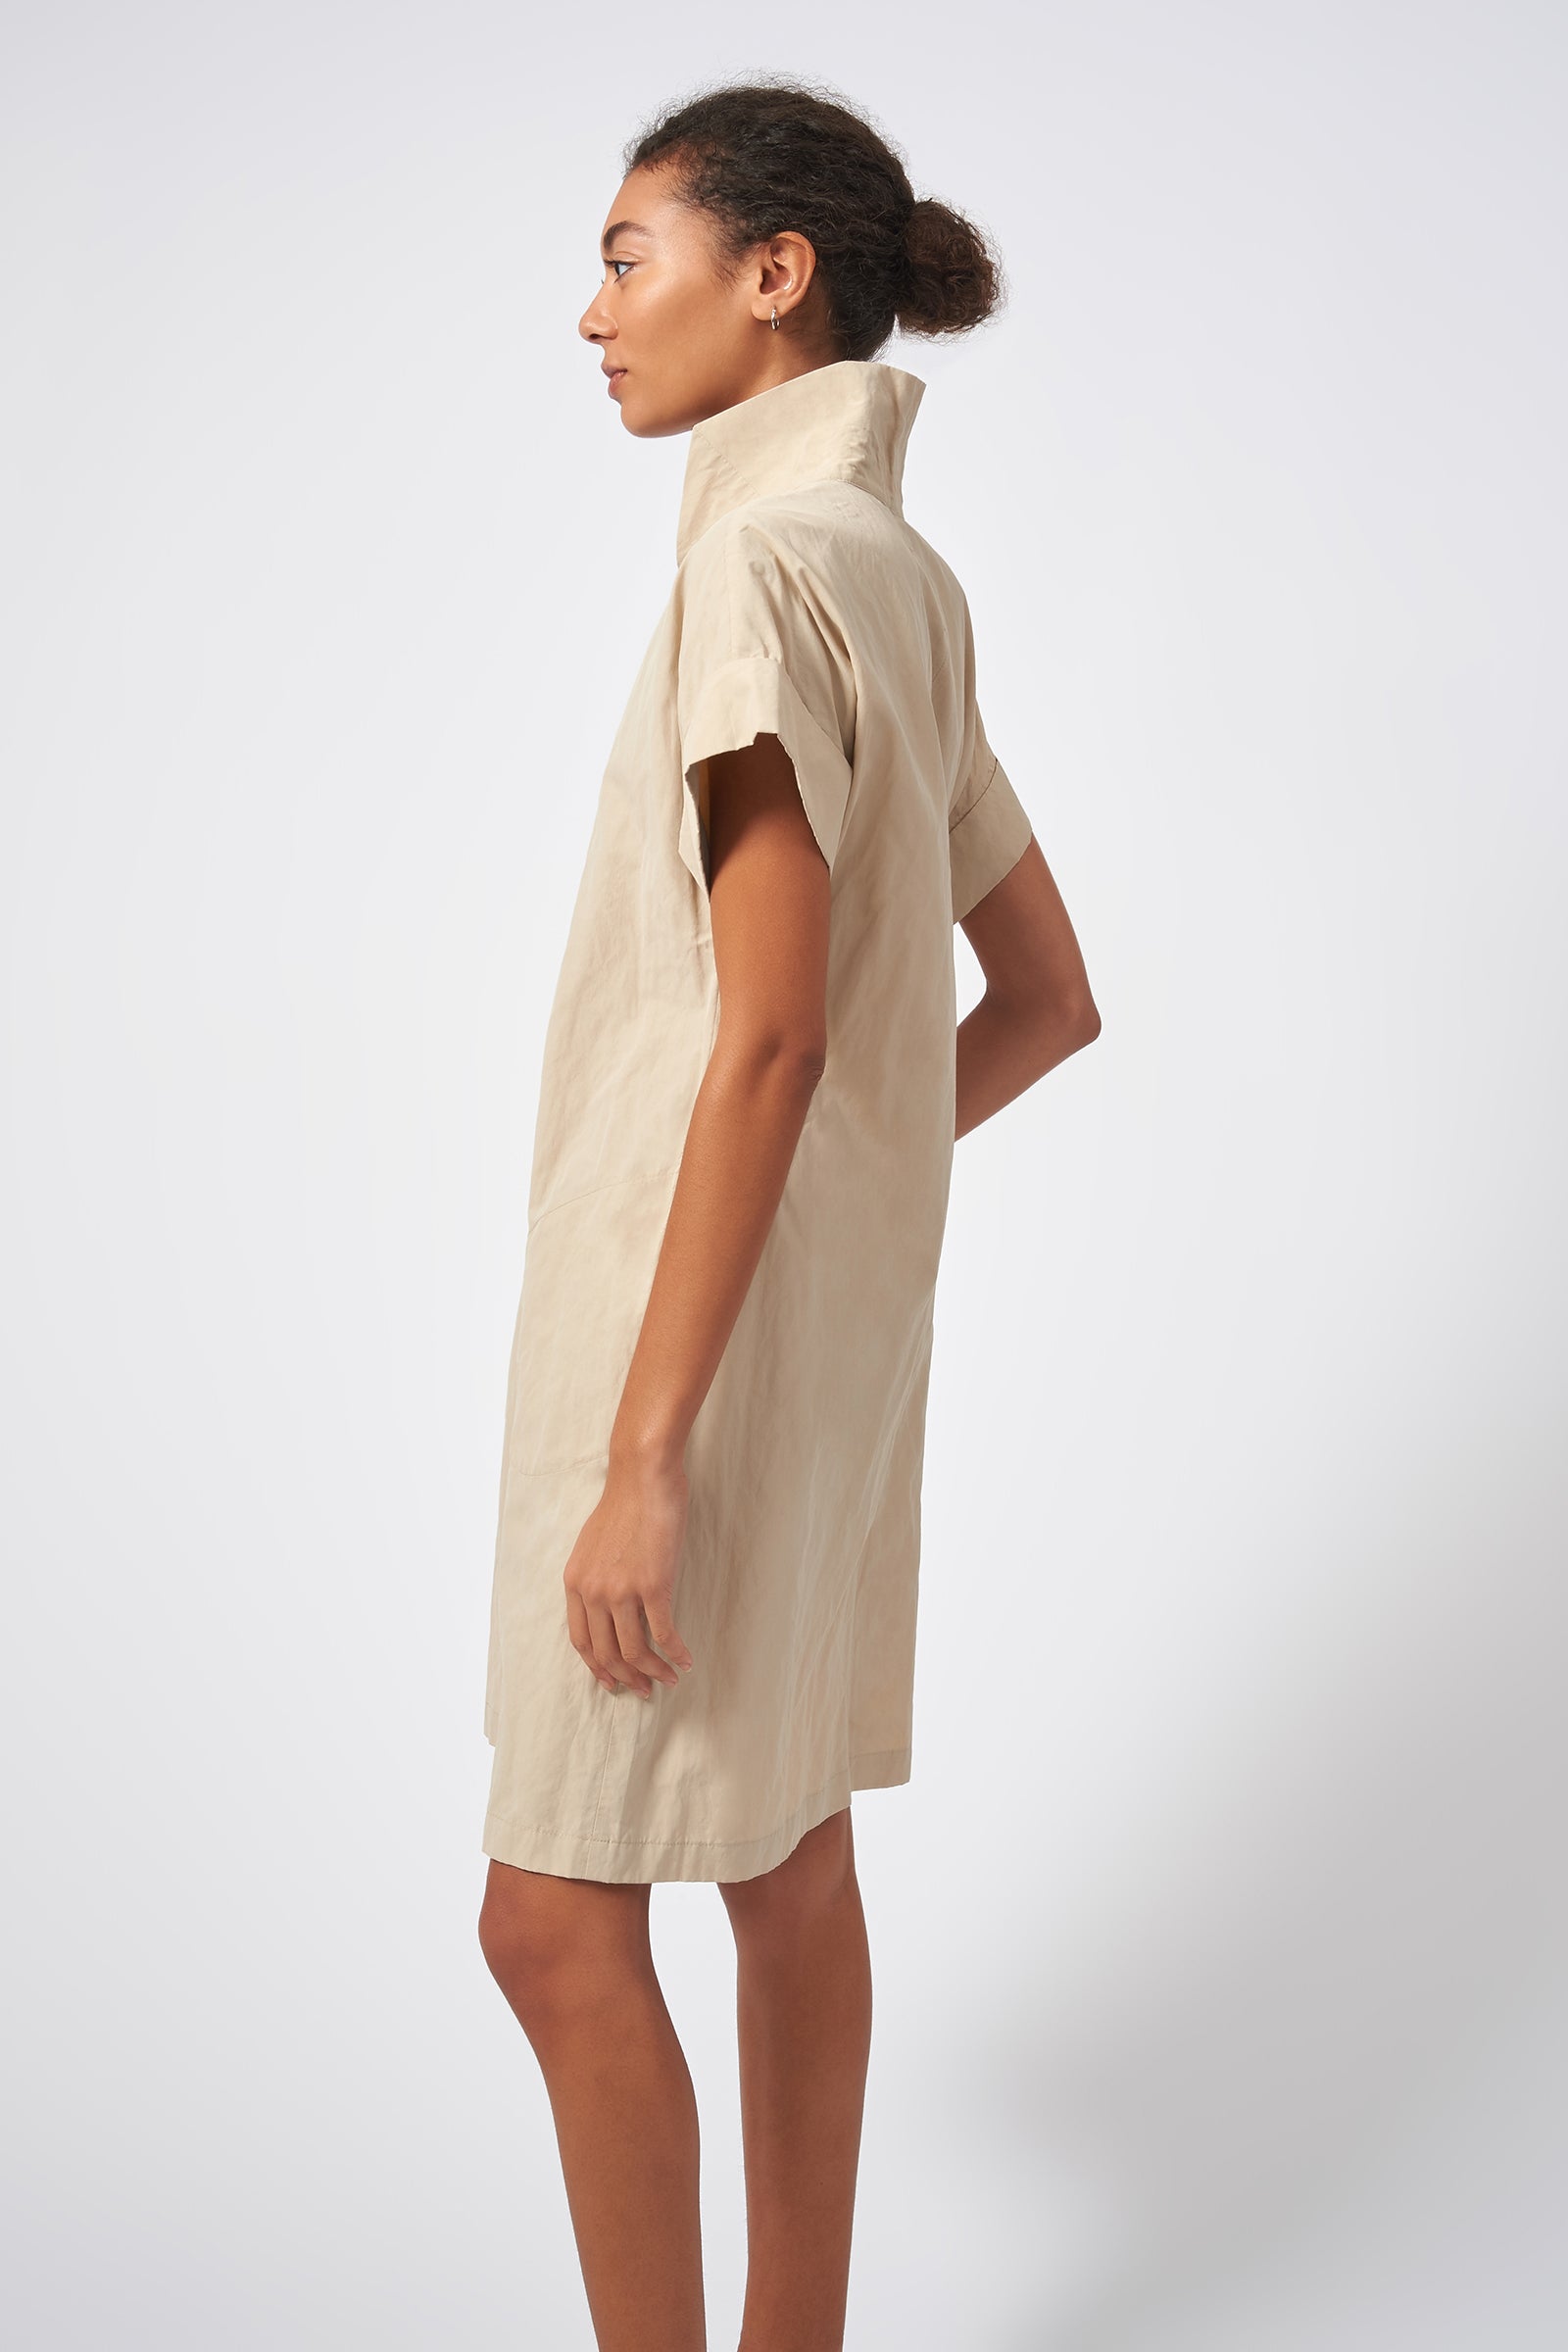 Kal Rieman Kimono Dress Italian Cotton Nylon Inox Khaki Dress On Model Side View